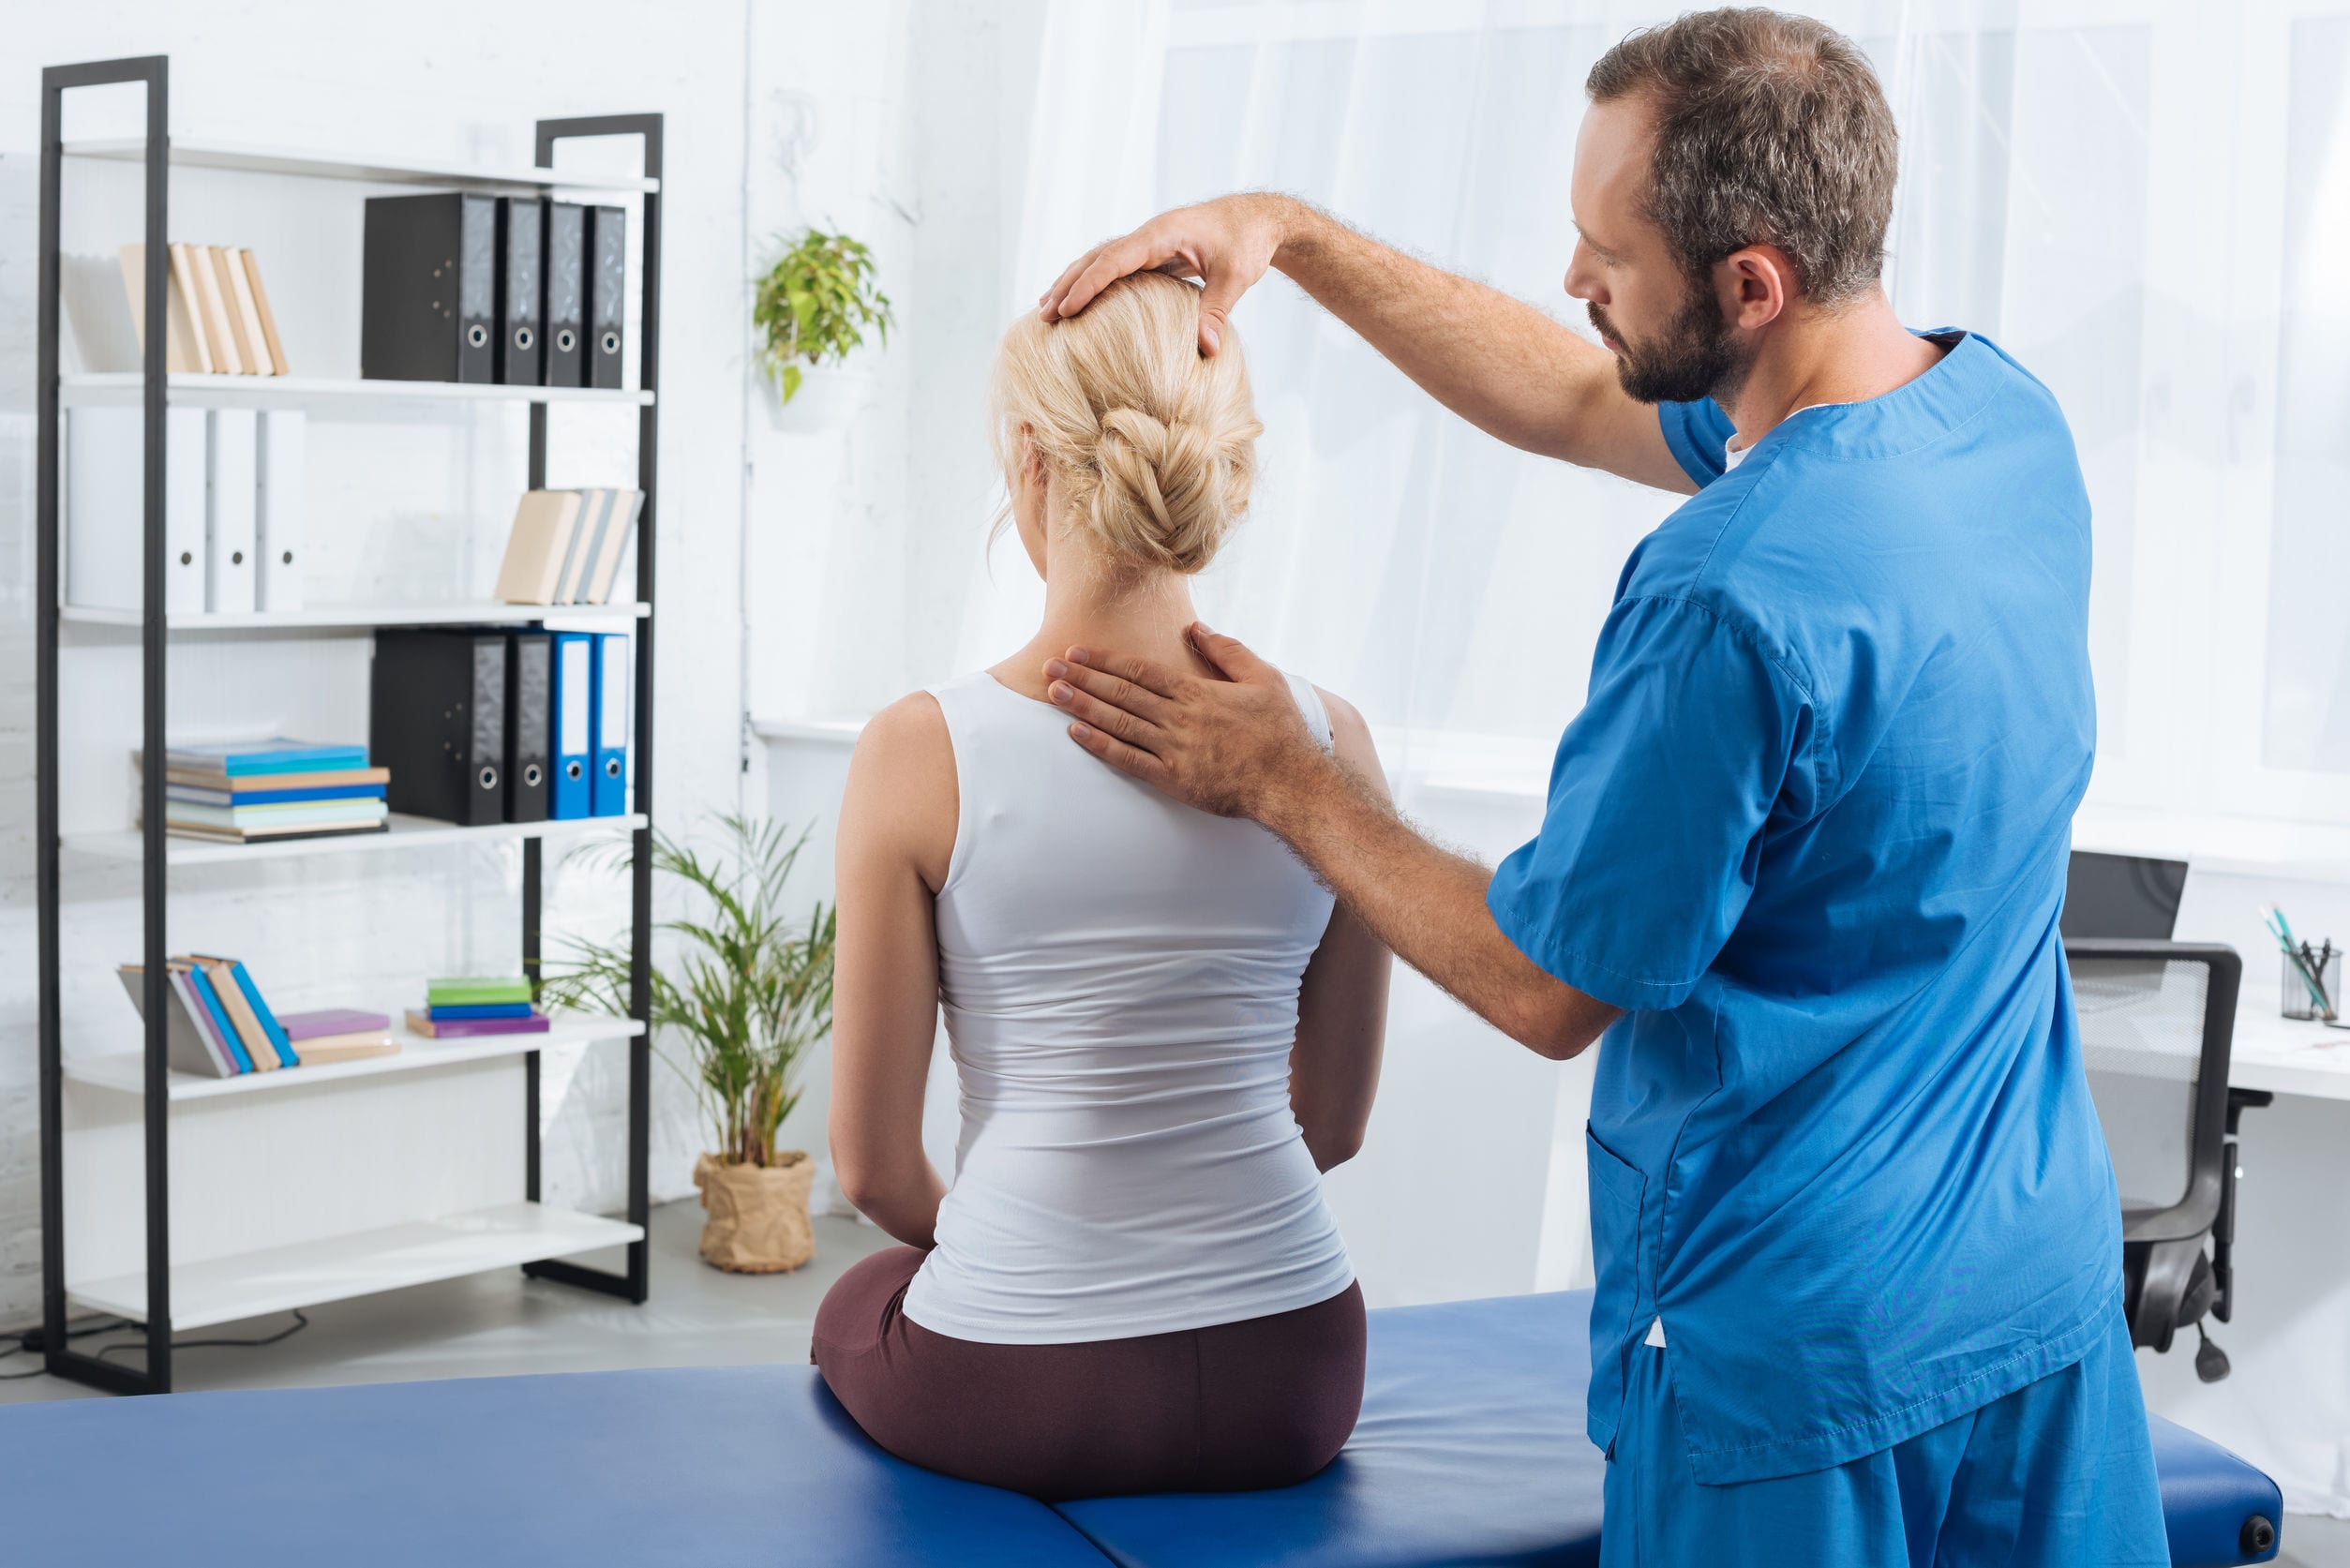 Does Spinal Manipulation Work?